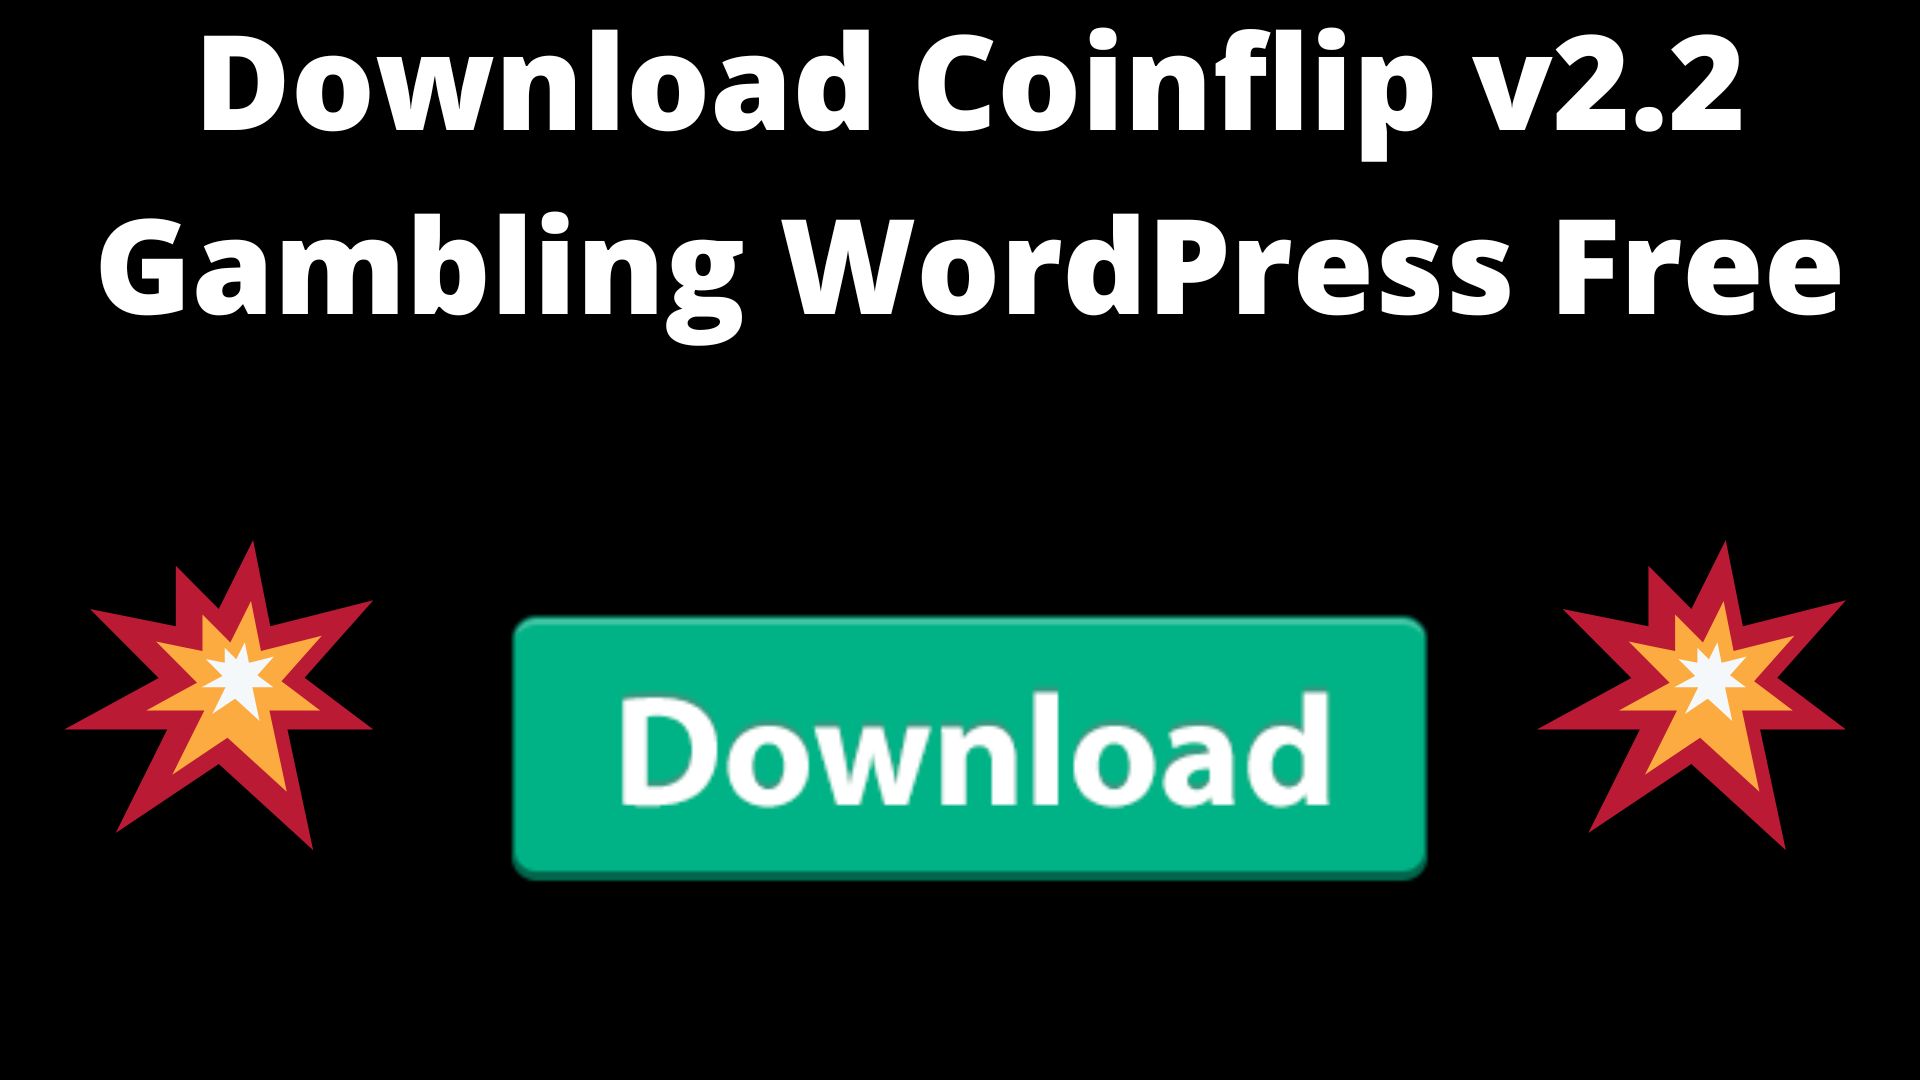 Download coinflip v2. 2 gambling wordpress free